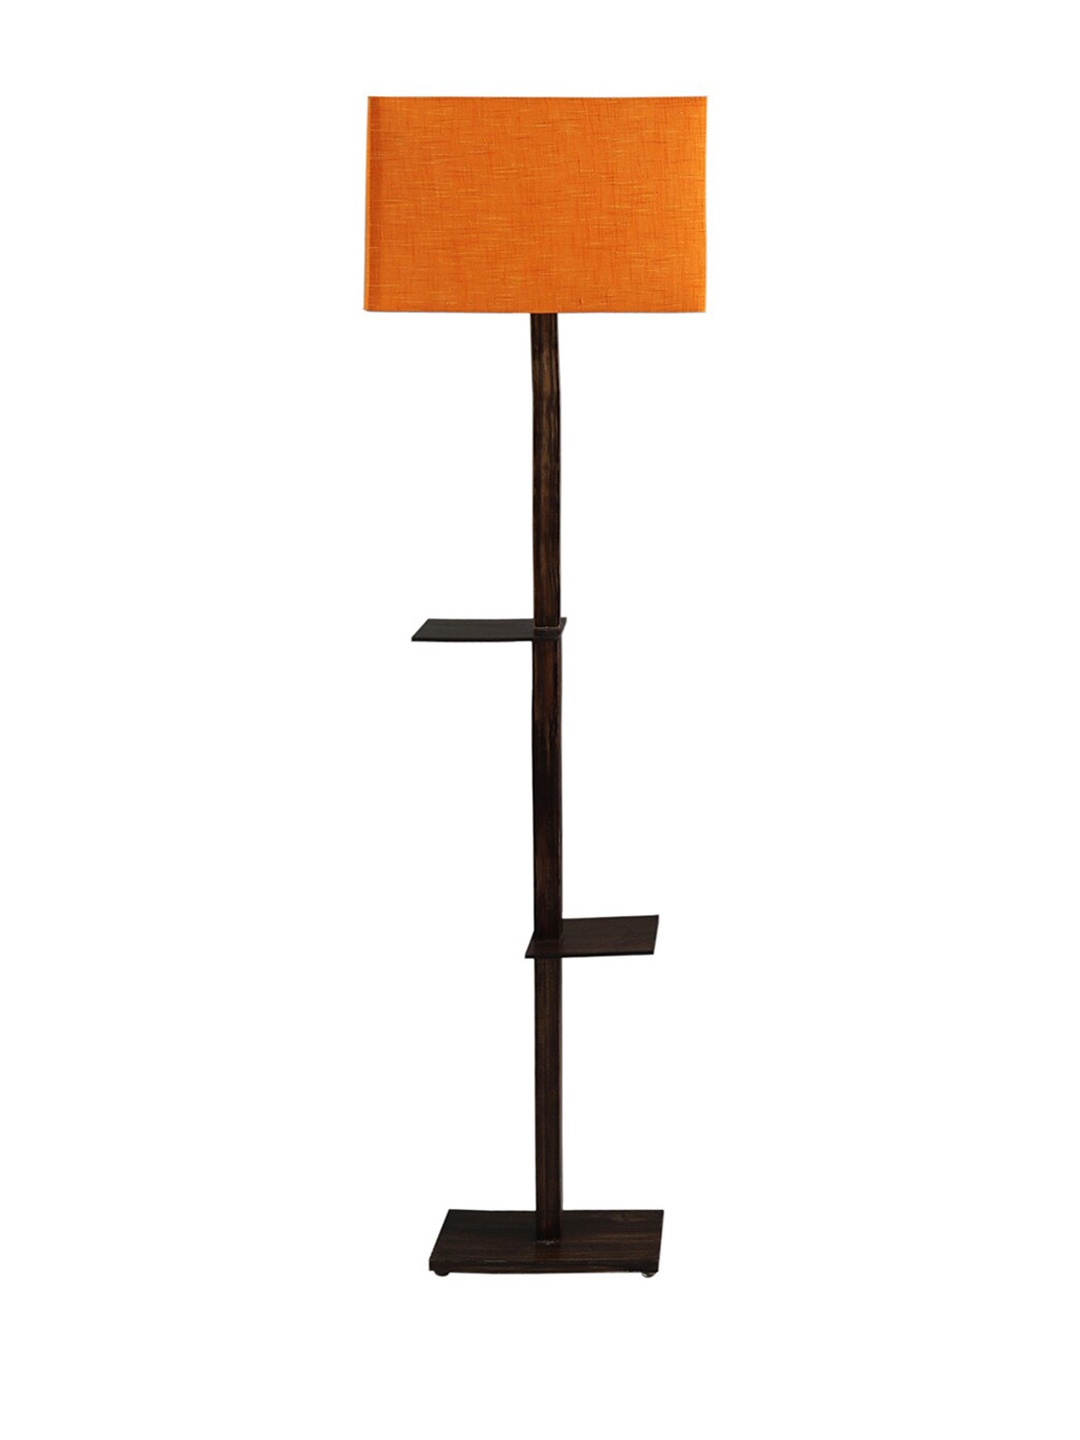 

SANDED EDGE Orange & Black Solid Contemporary Rectangular Shelf Lamp